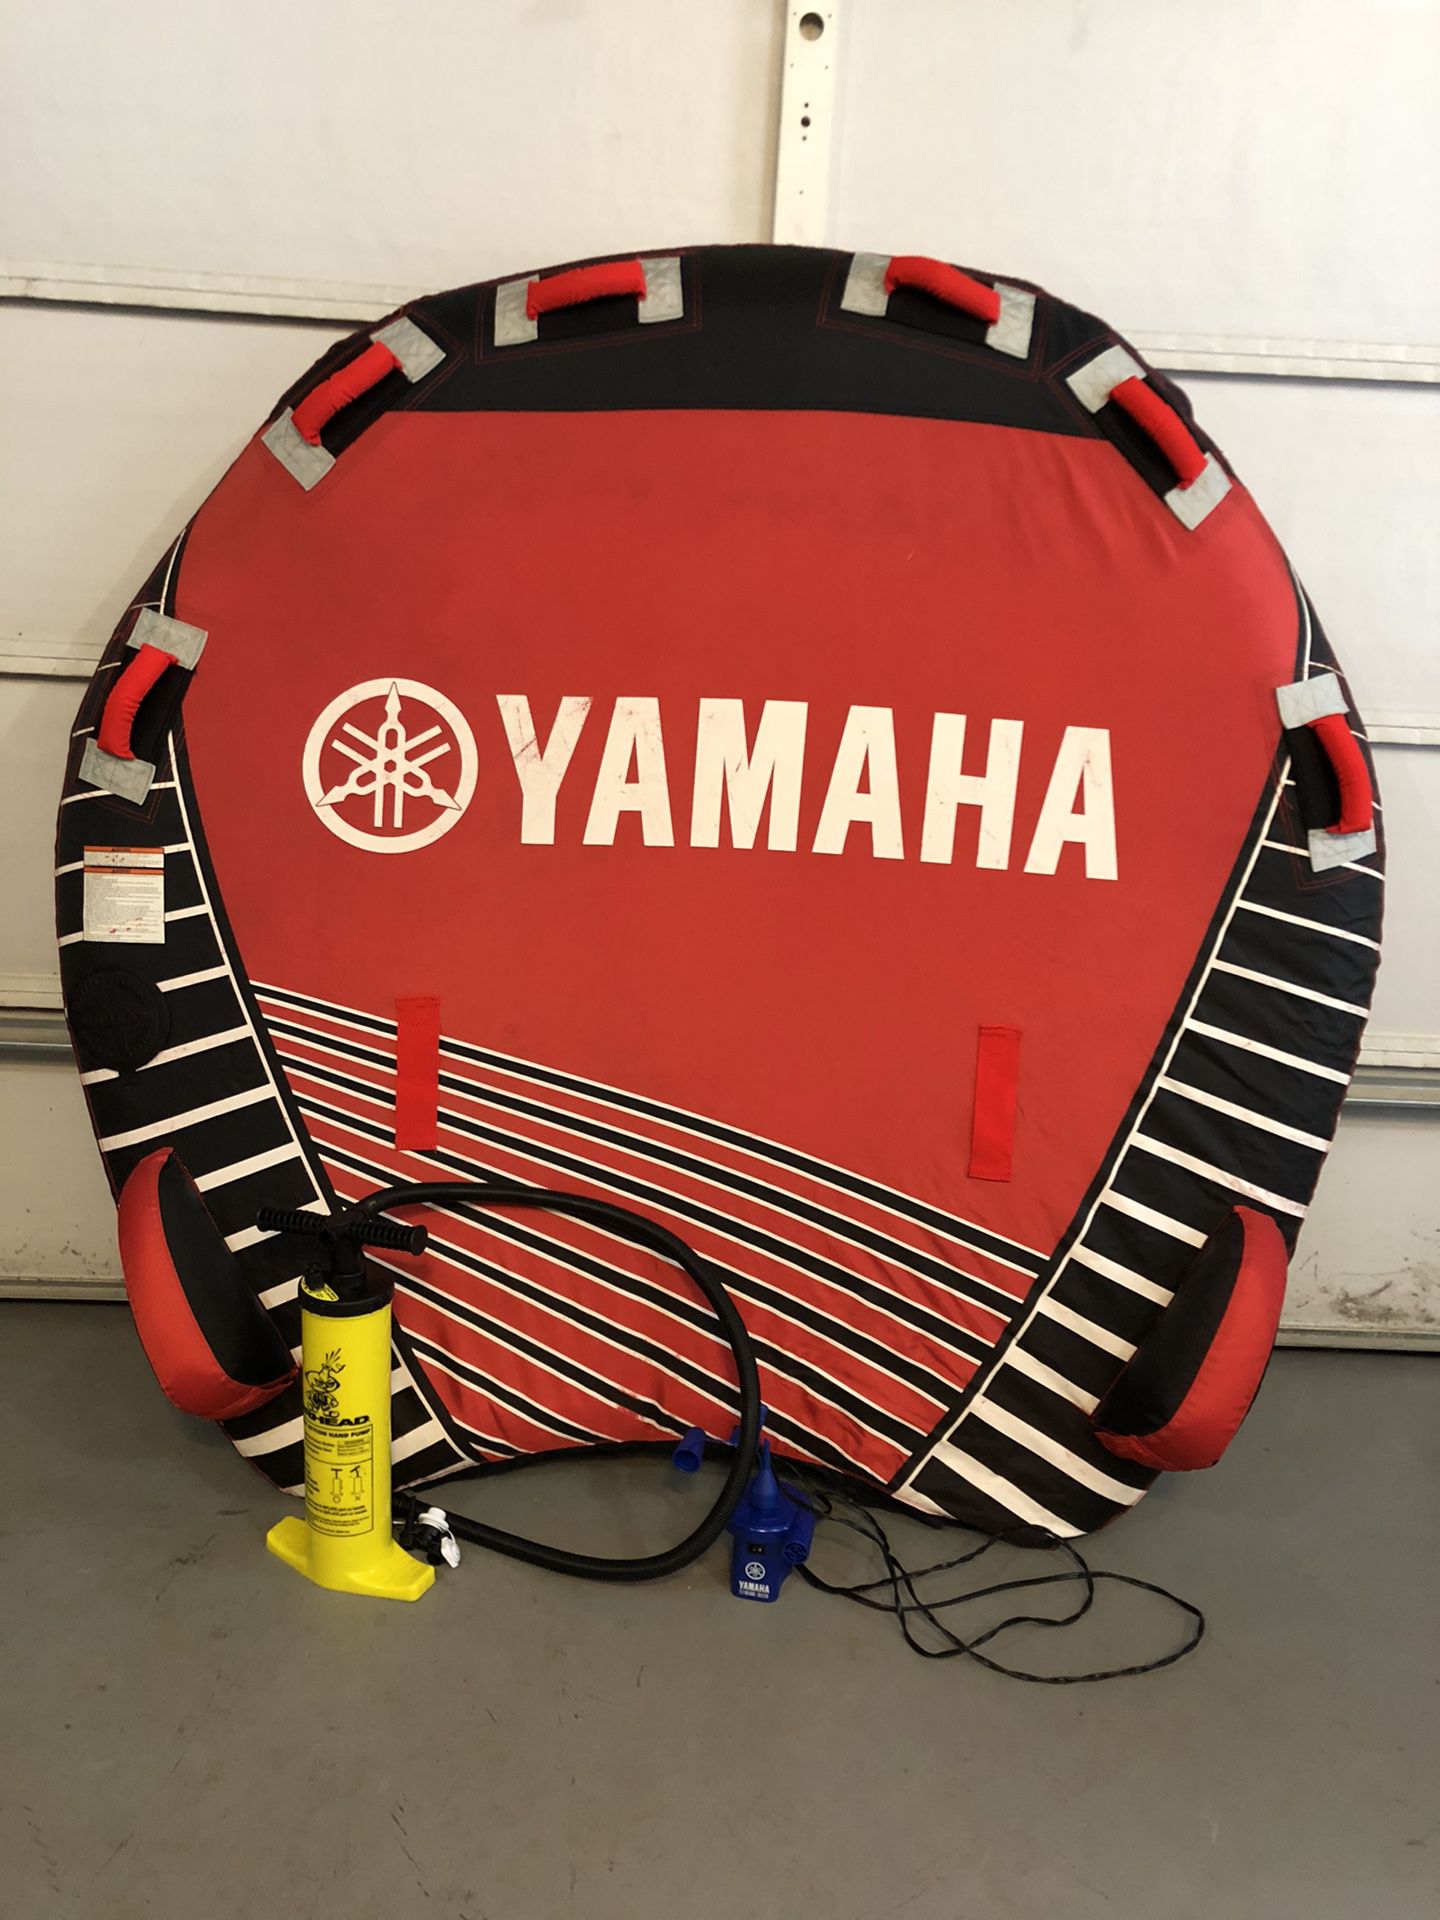 Yamaha/Airhead 60” tube + pumps